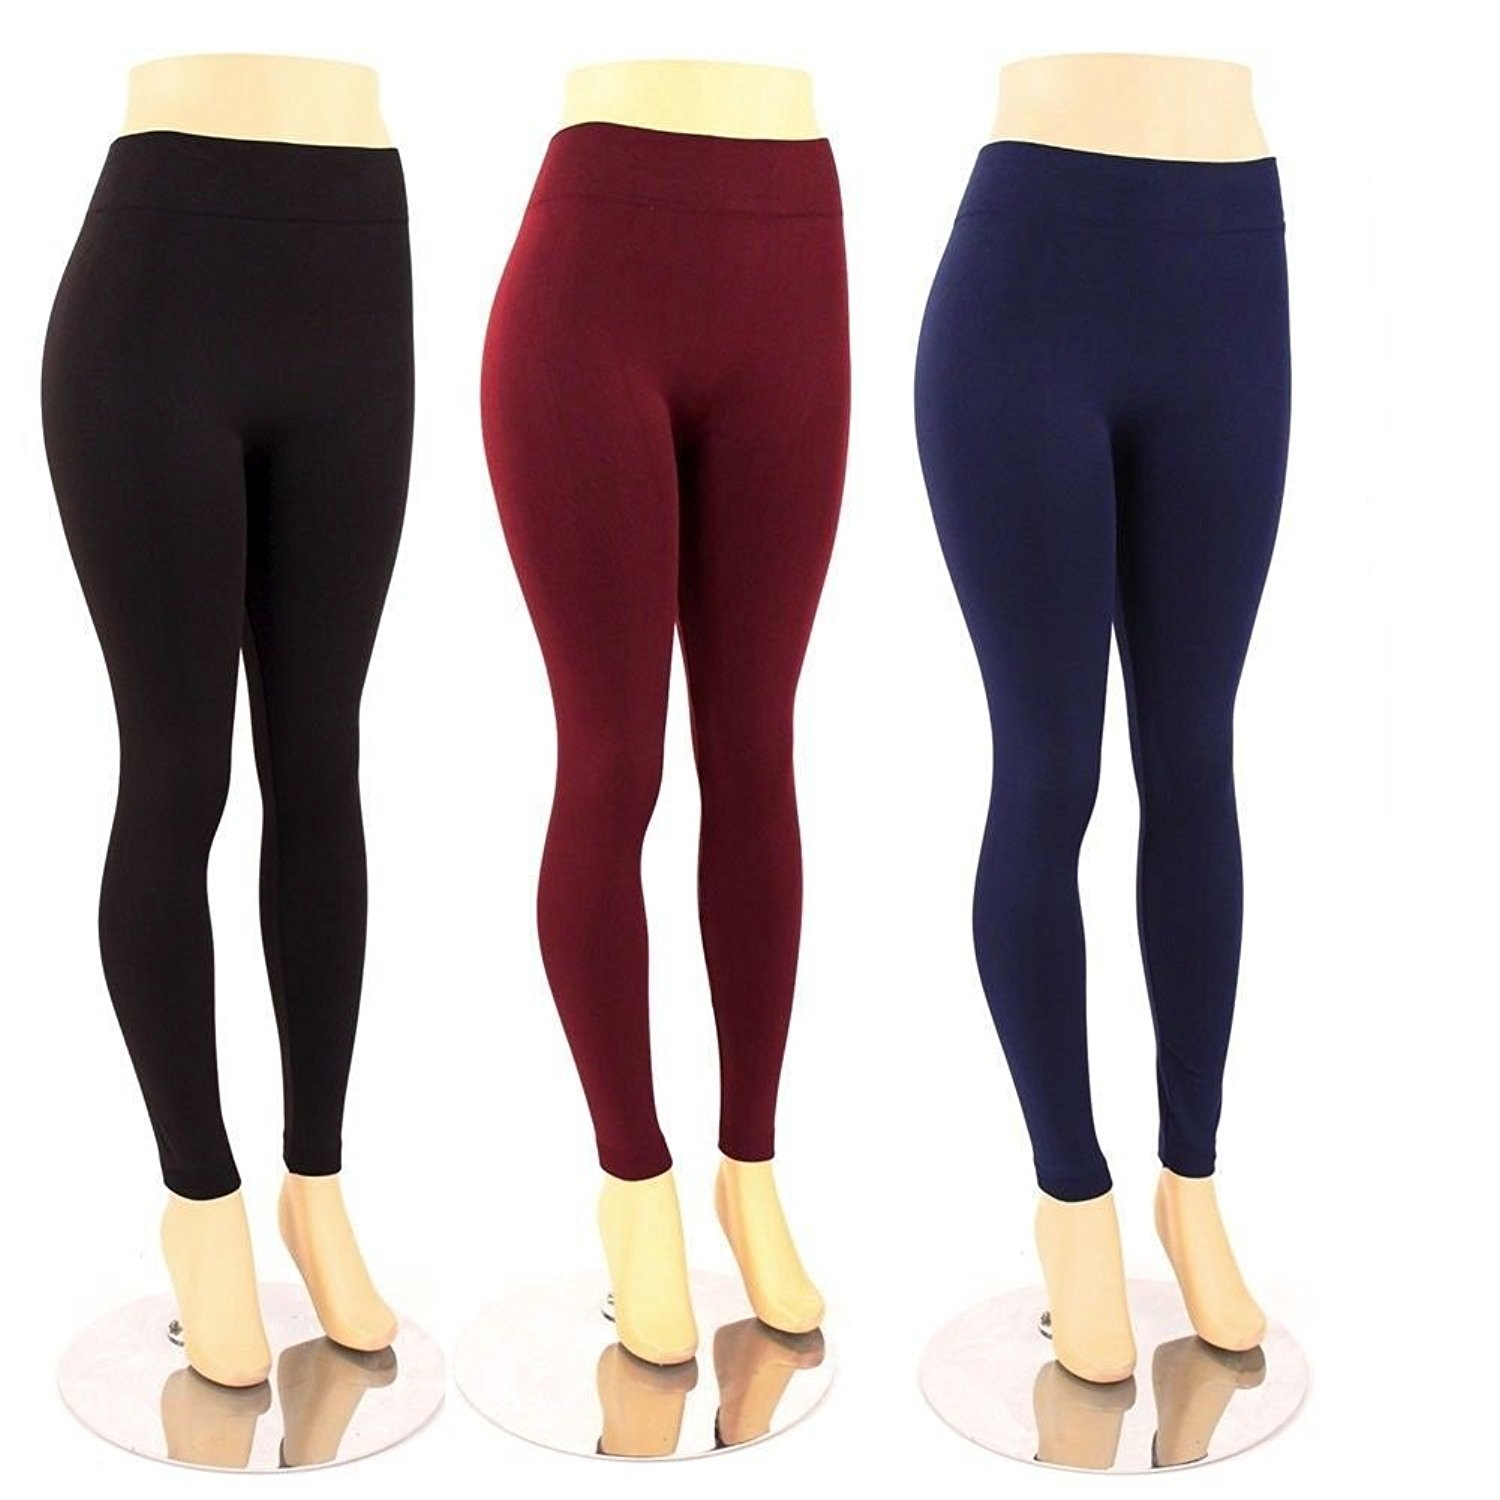 Buy (PACK OF 5) Warm Woollen Women's Winter Leggings - Assorted Pack ...